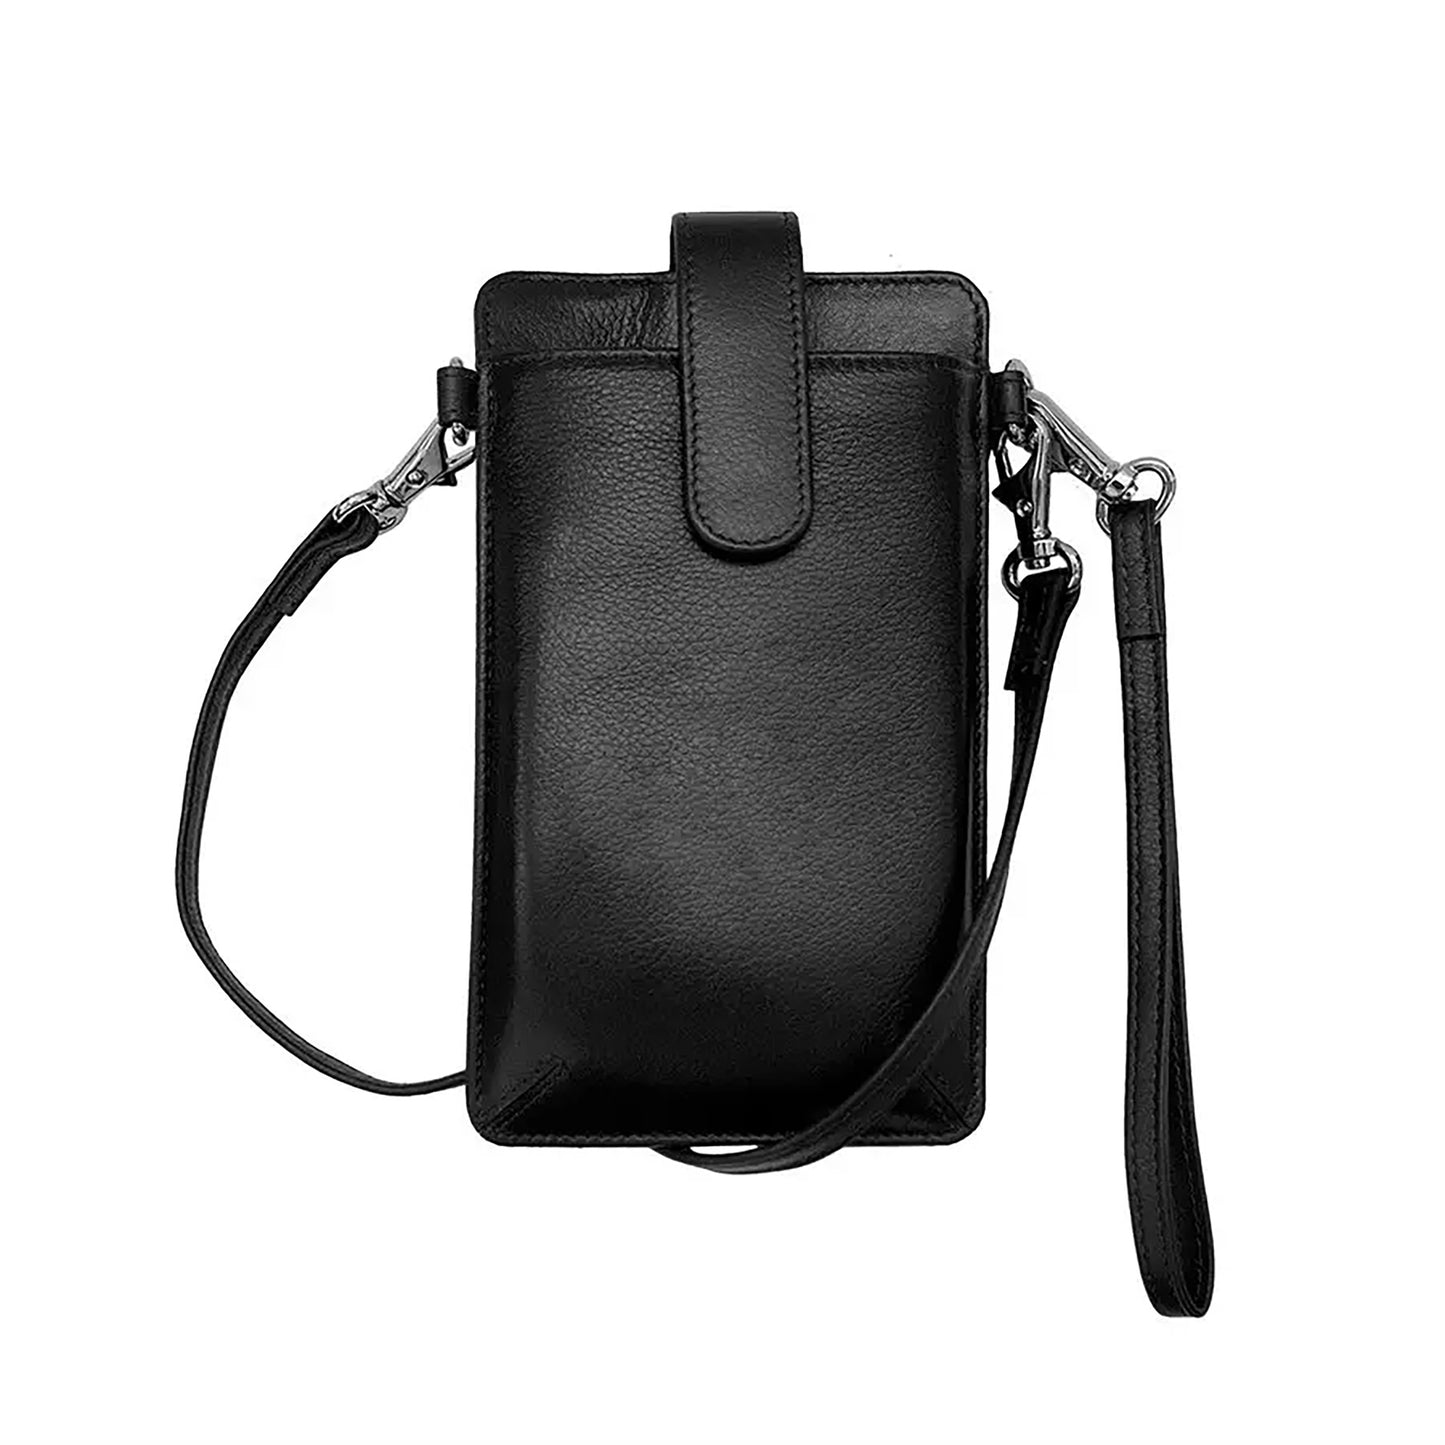 Smartphone case with cross body strap -black